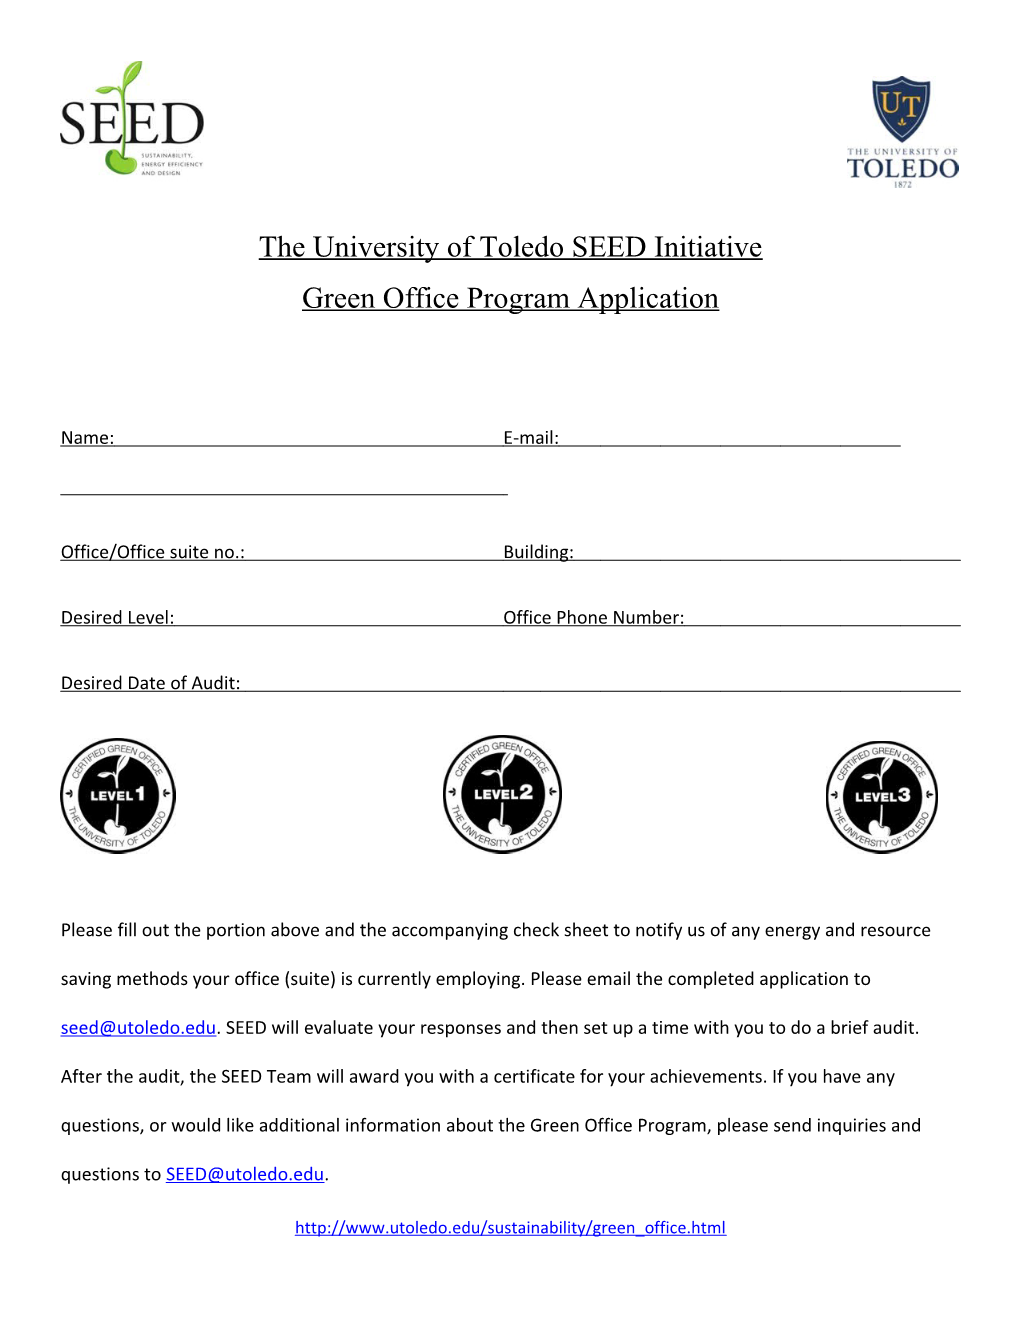 The University of Toledo SEED Initiative